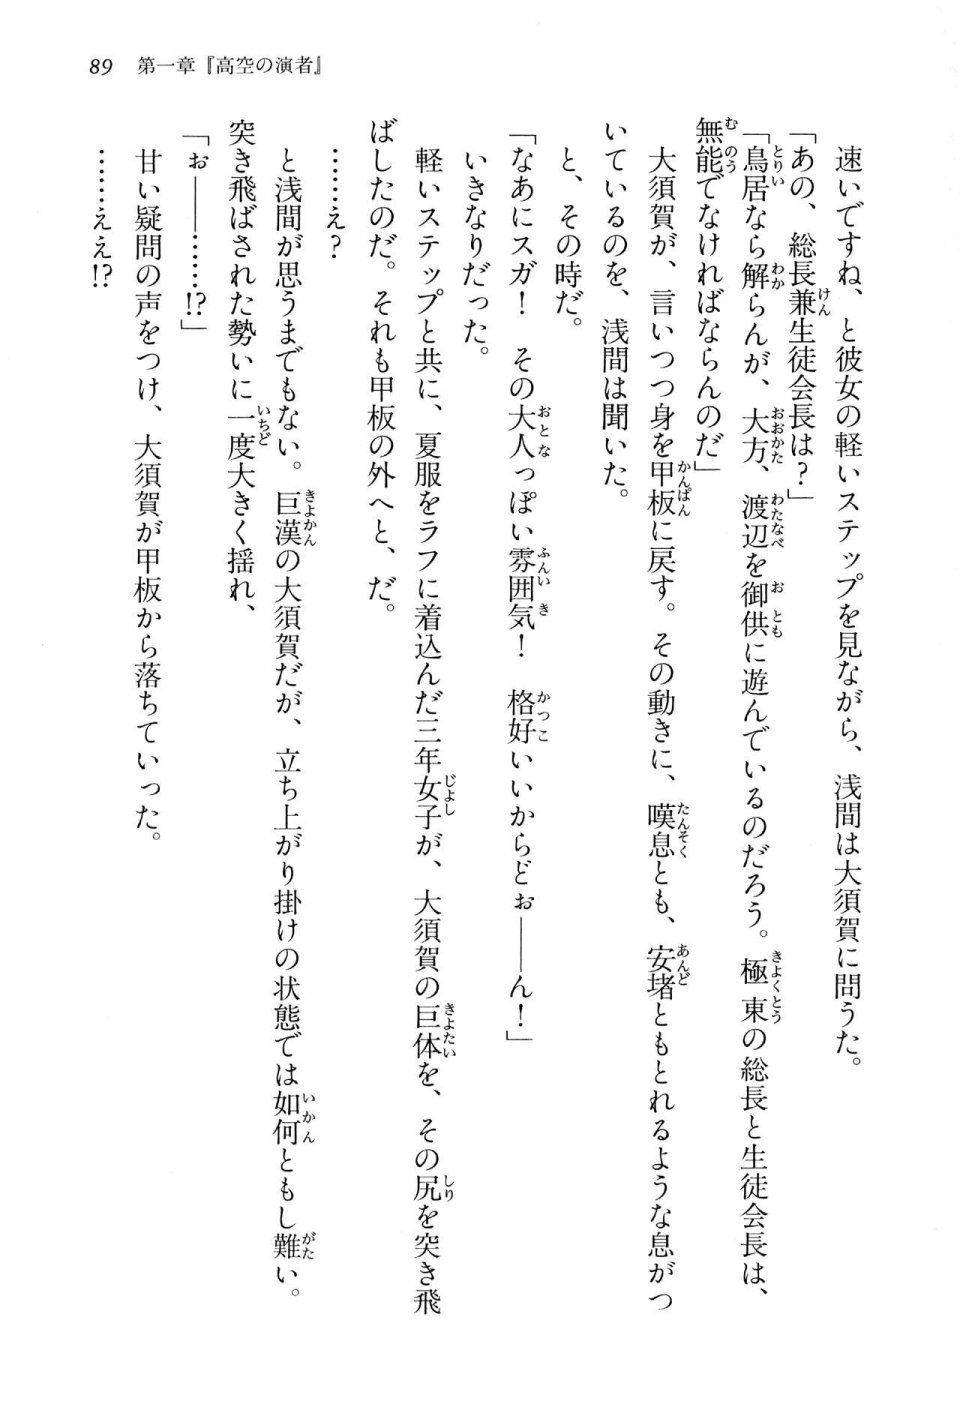 Kyoukai Senjou no Horizon BD Special Mininovel Vol 1(1A) - Photo #93